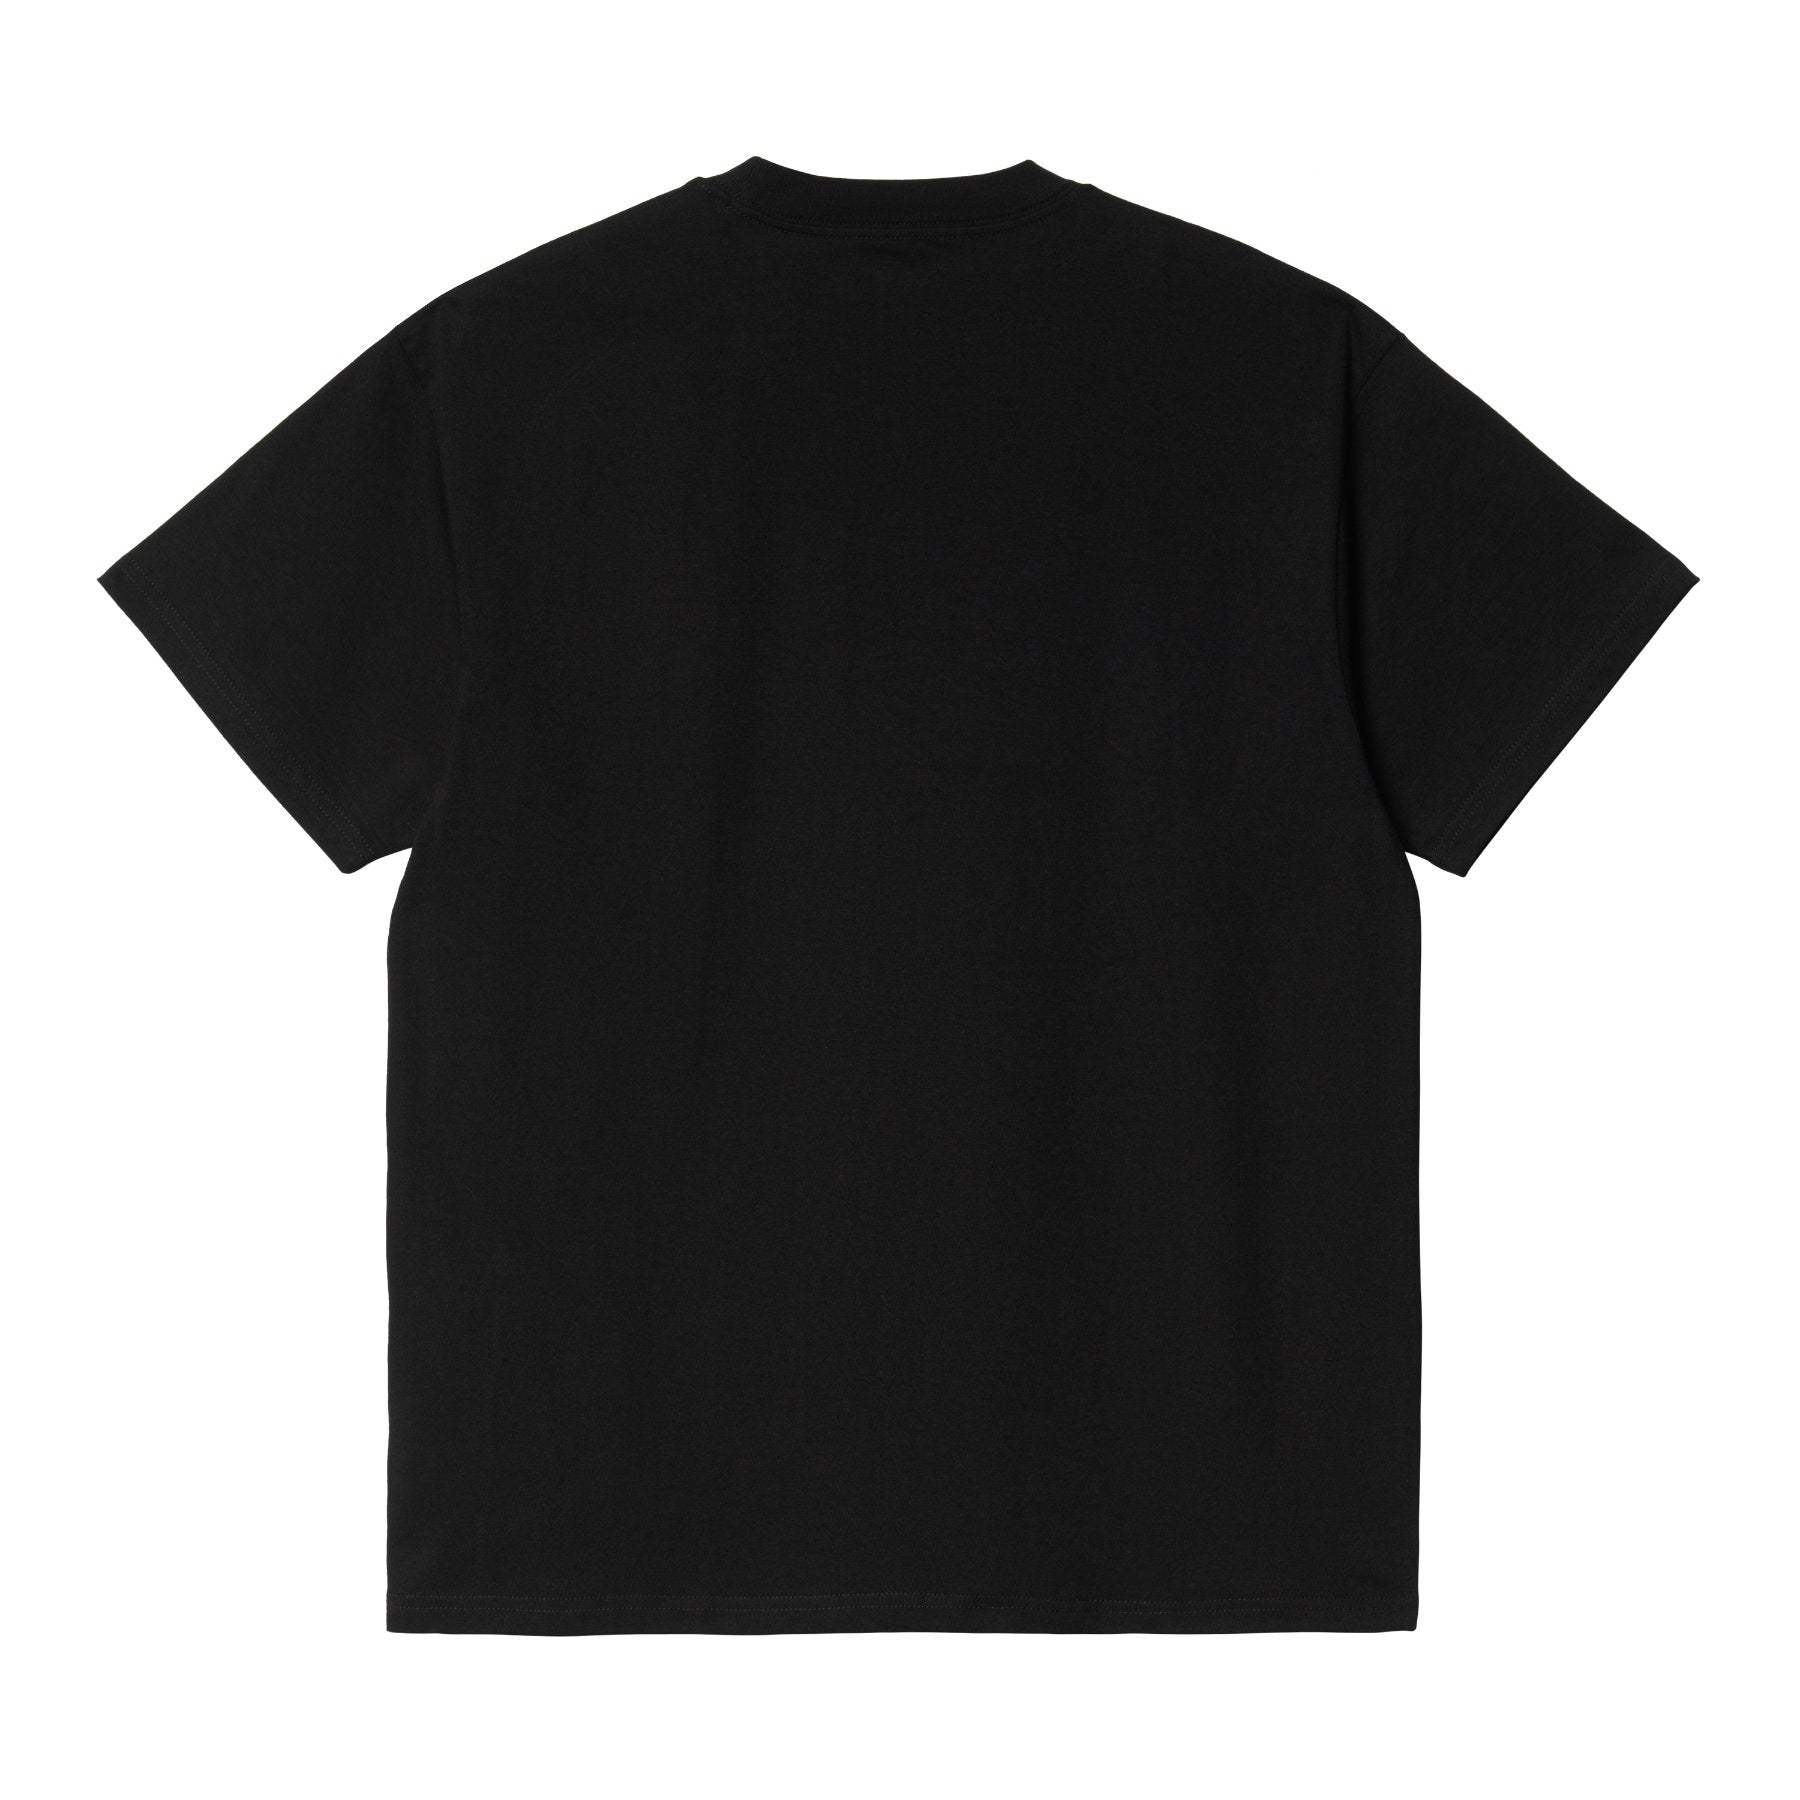 Carhartt WIP Chessboard T-Shirt Black. Foto de trás.